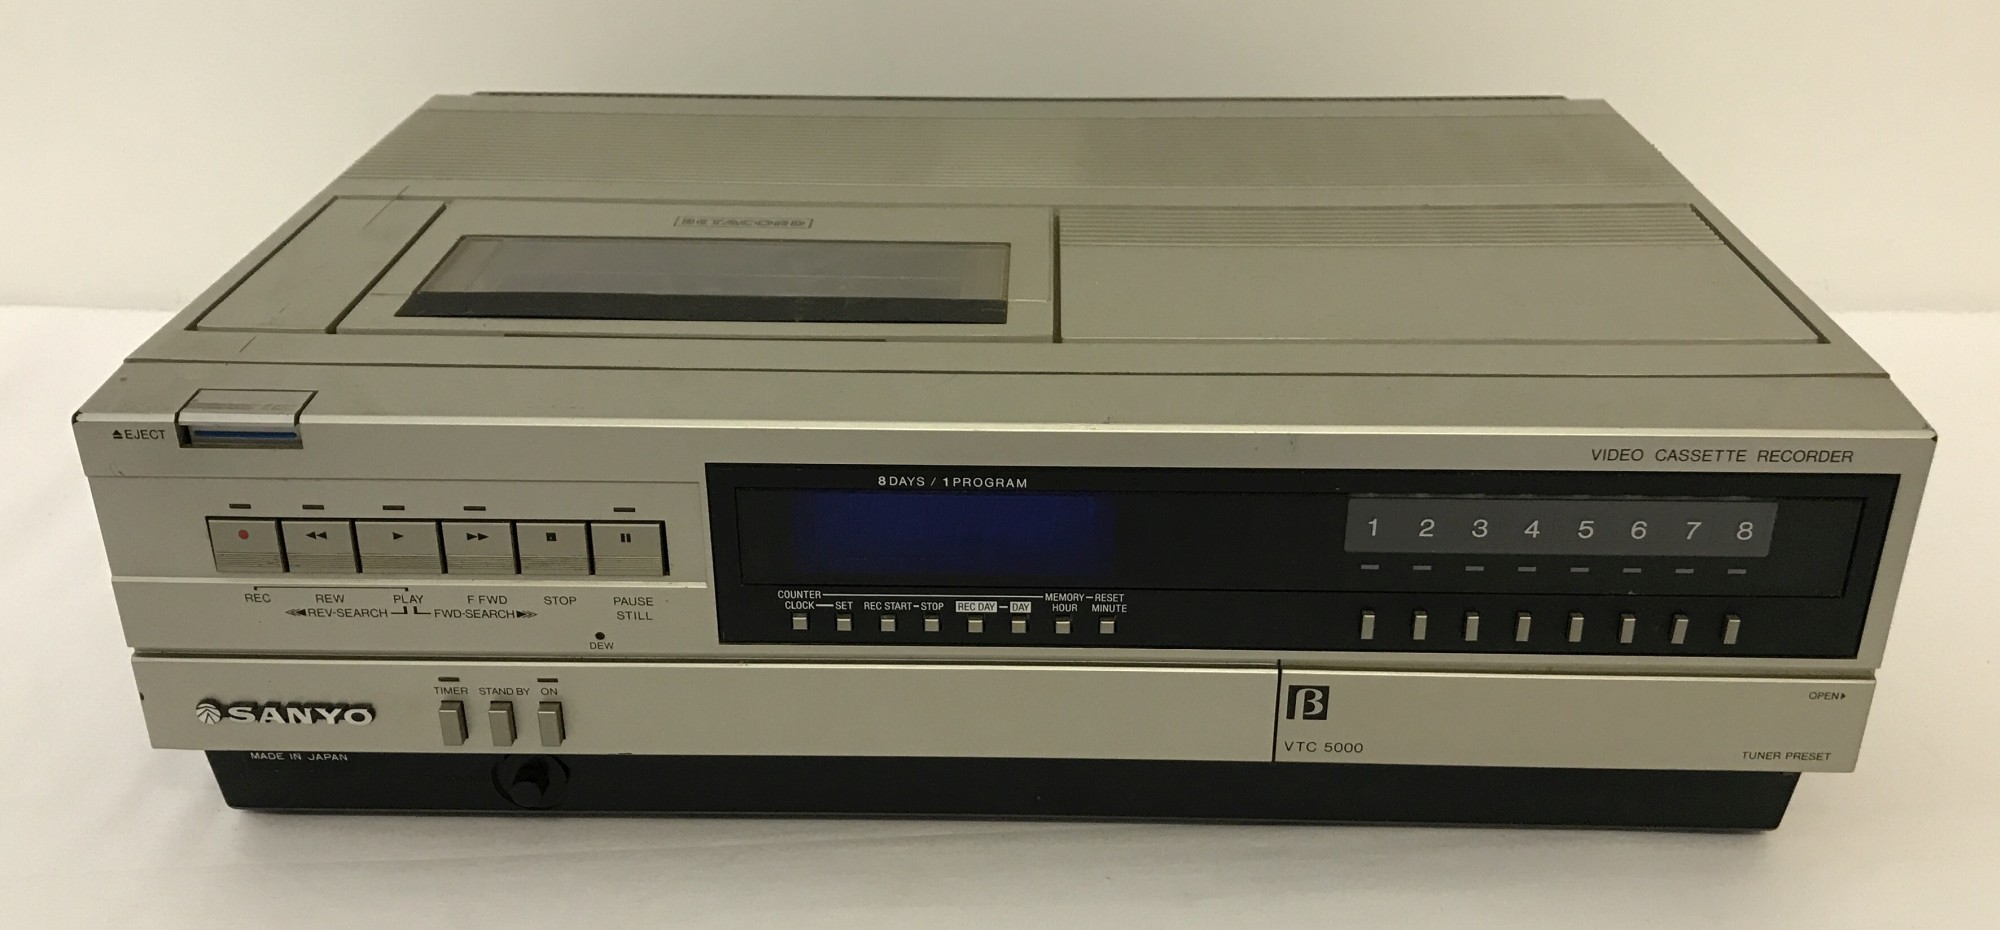 Sanyo VTC 5000 Betacord top loading Video Cassette Recorder.